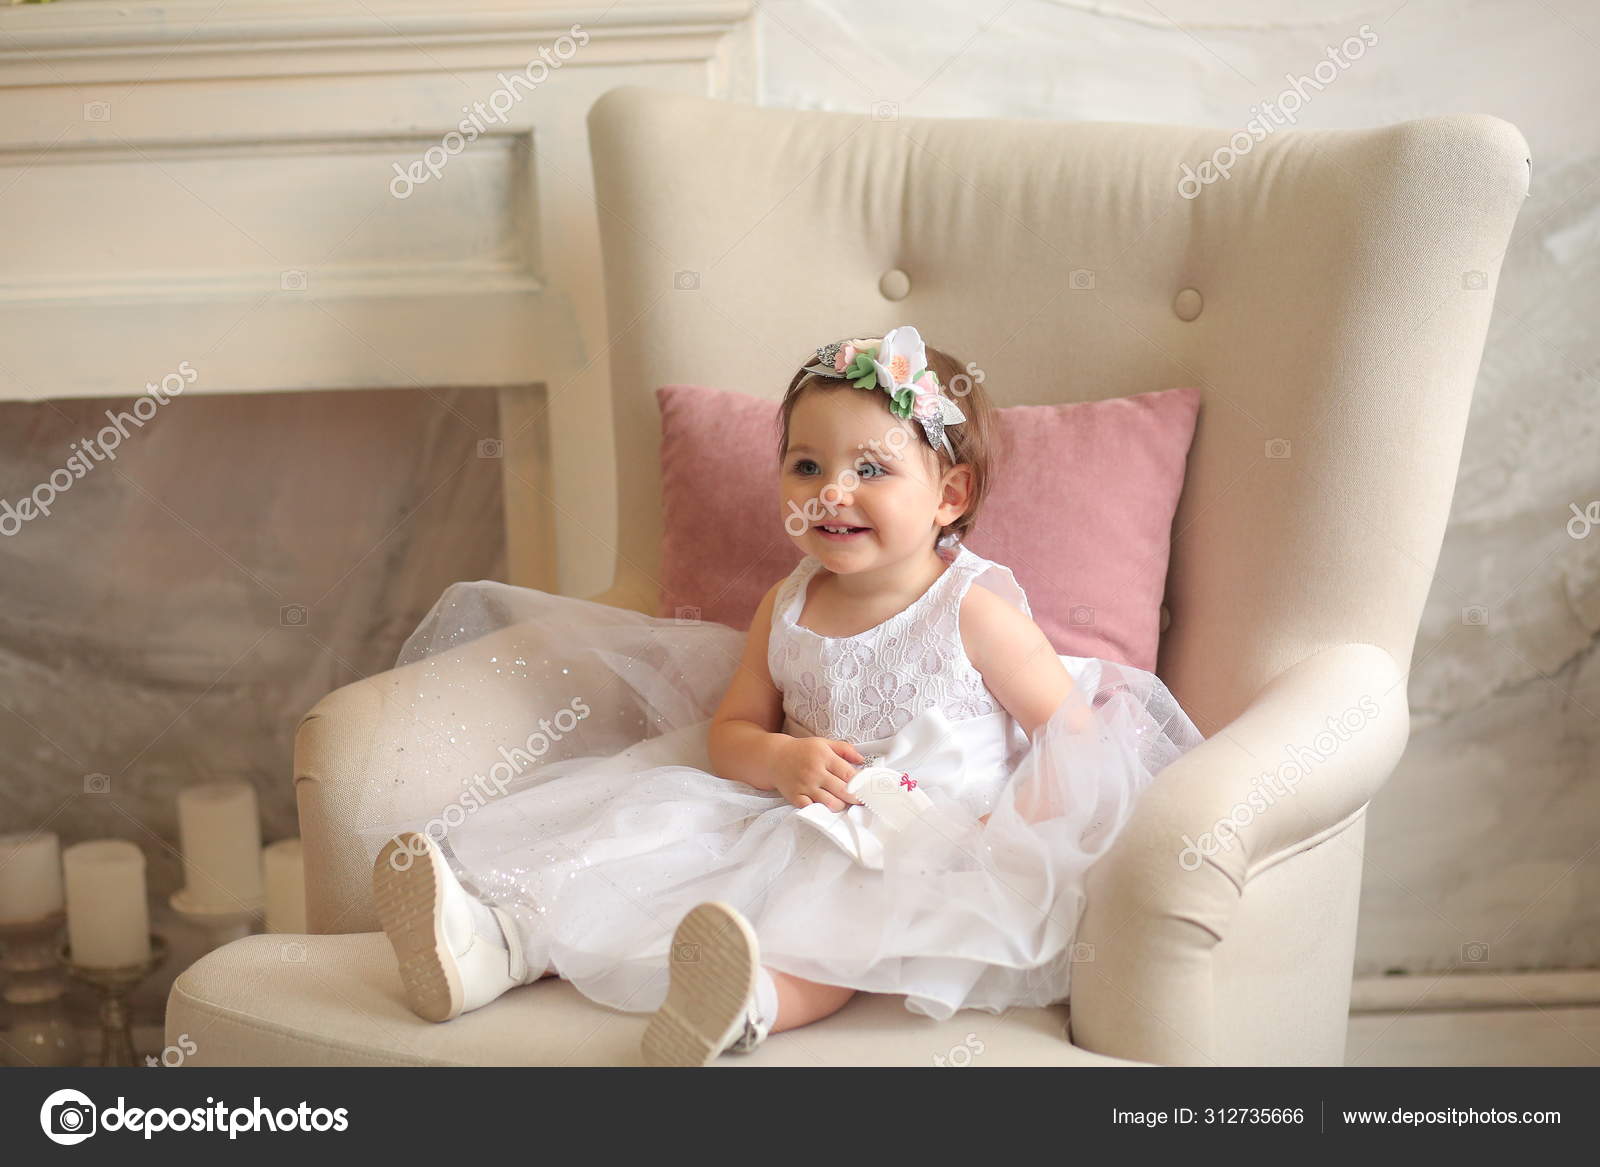 Discover 139+ baby girl white dress best